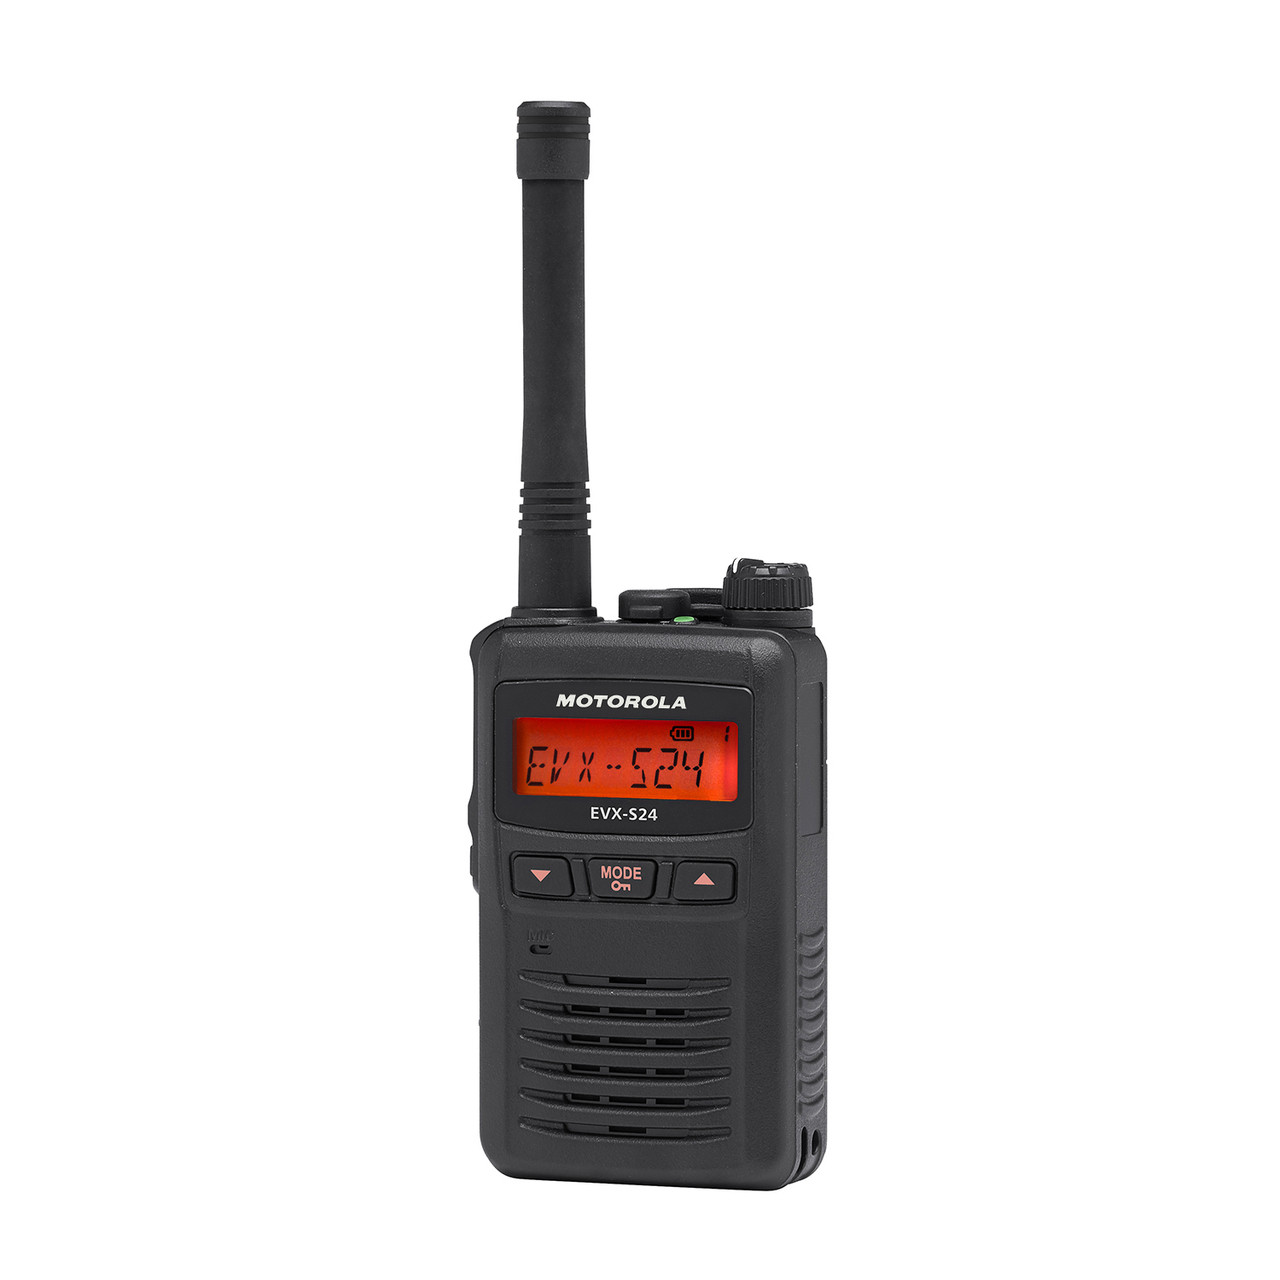 Radio Despertador Digital METRONIC (X2) DUO – stock24